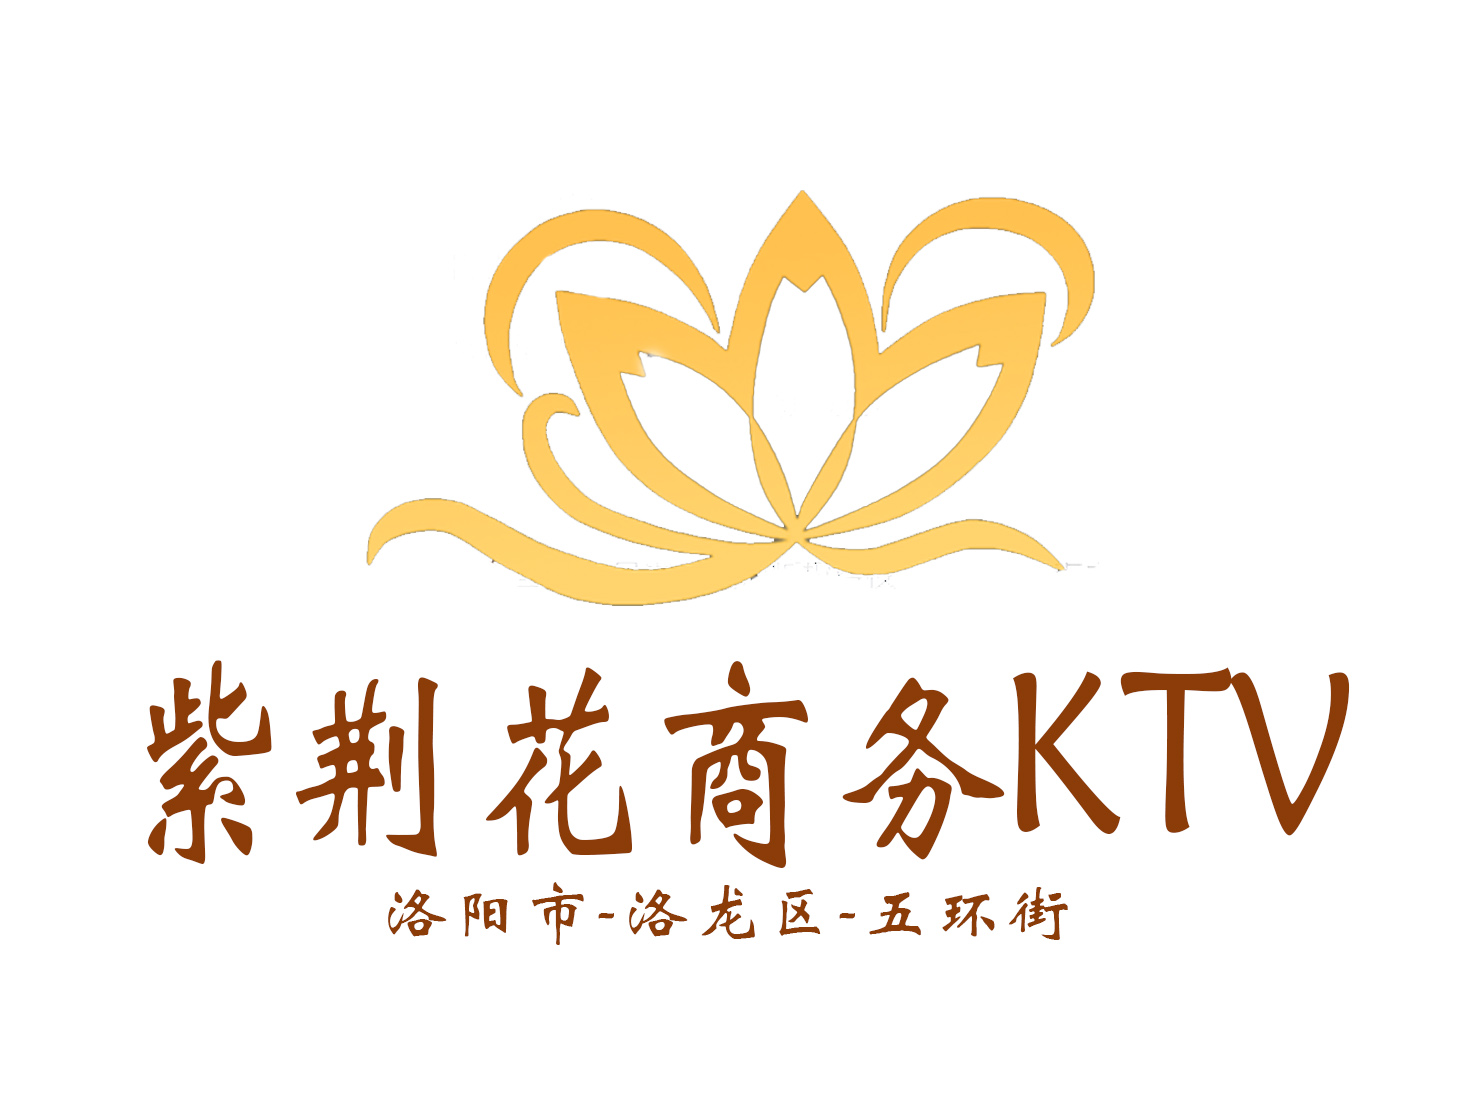 The World KTV